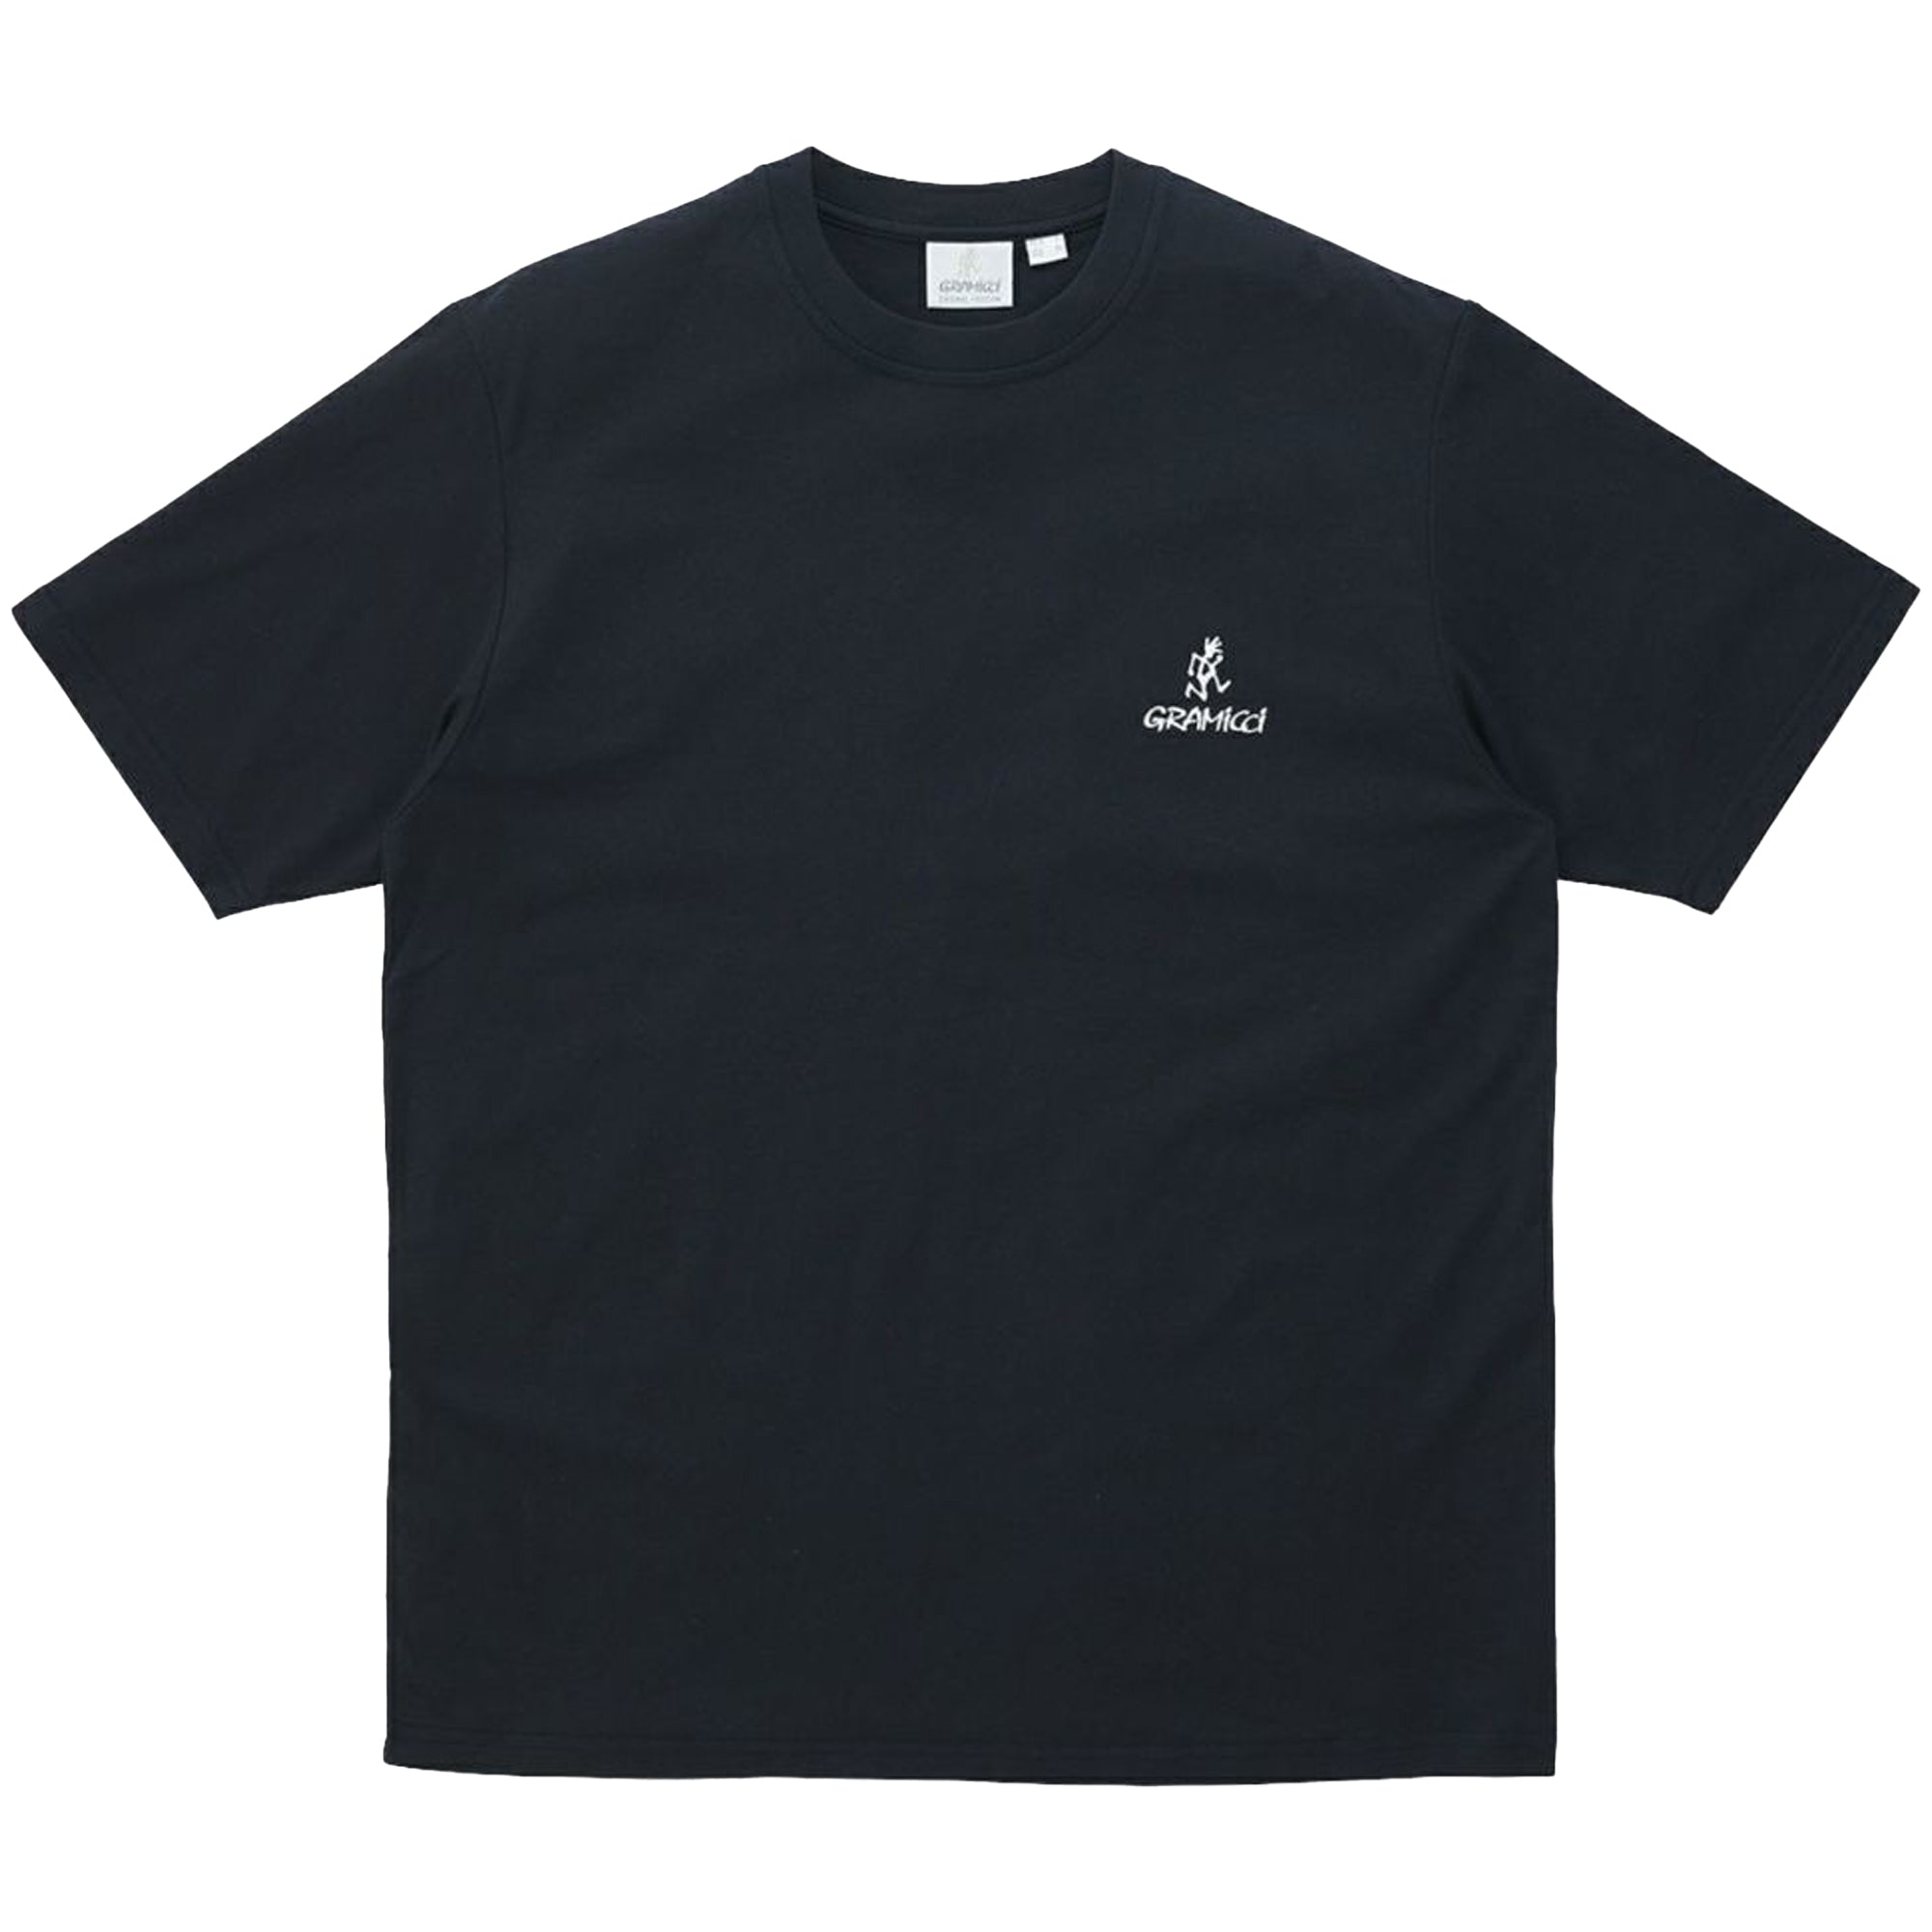 Gramicci Peak T-Shirt - Vintage Black